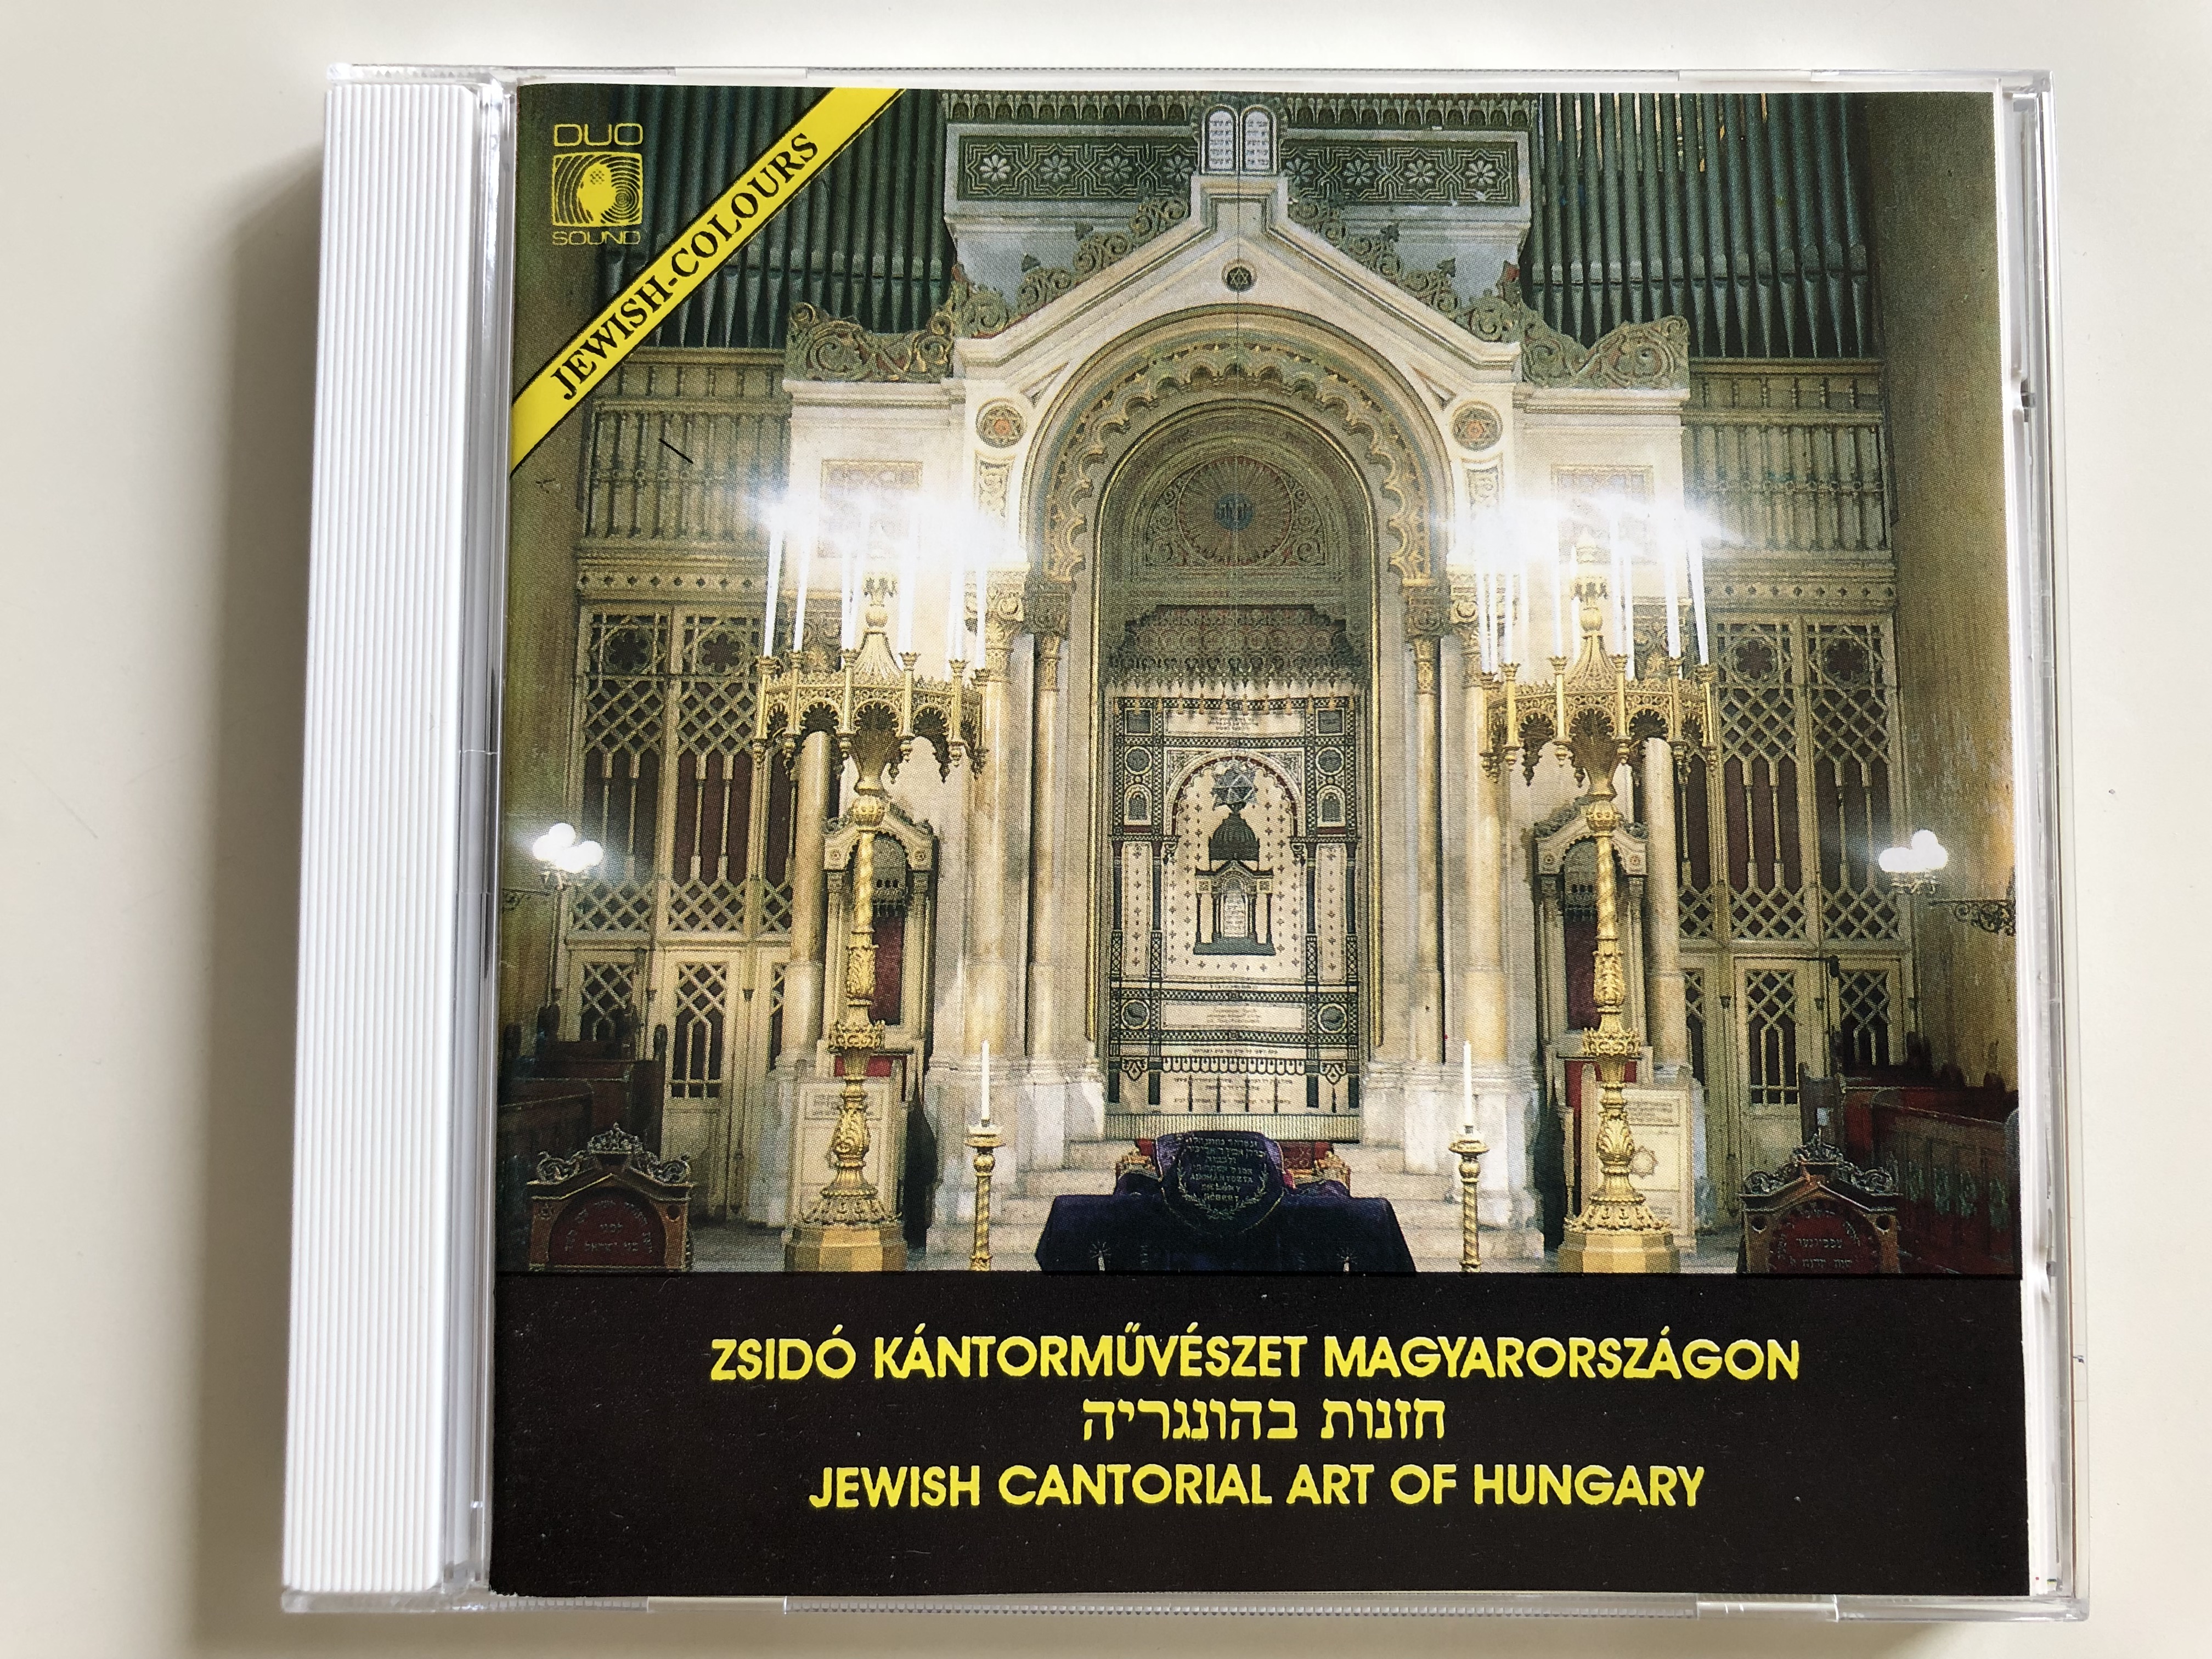 zsid-k-ntorm-v-szeti-magyarorsz-gon-jewish-cantorial-art-of-hungary-audio-cd-1992-duo-sound-jccd-101-1-.jpg